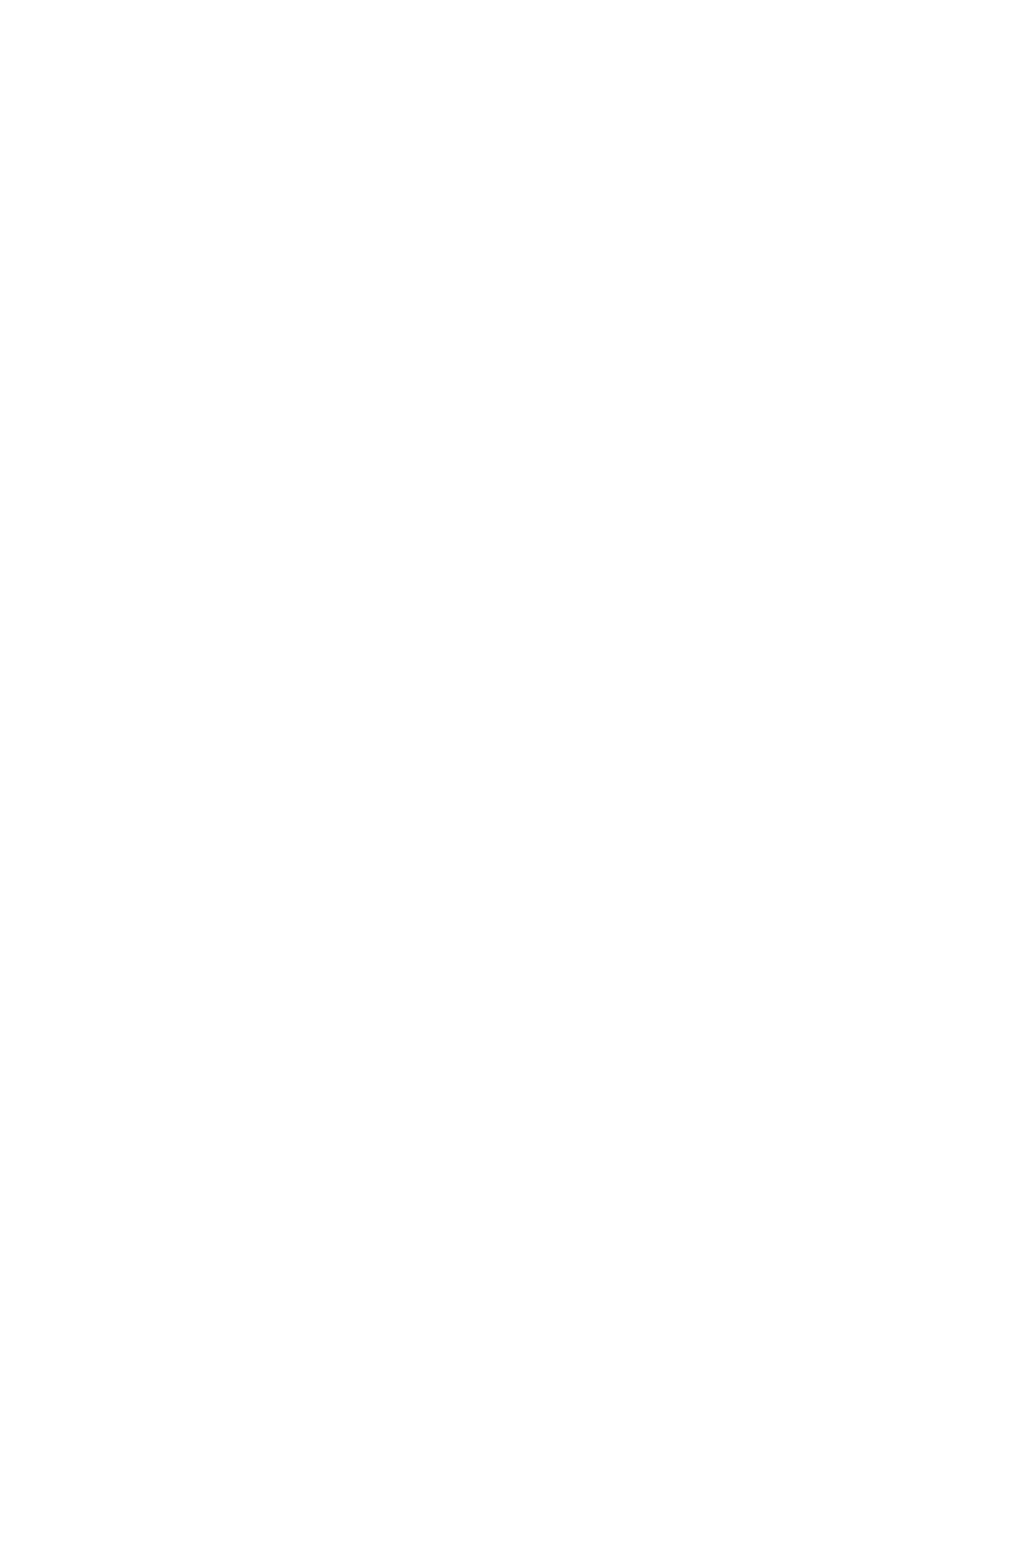 Boohoo Group logo pour fonds sombres (PNG transparent)